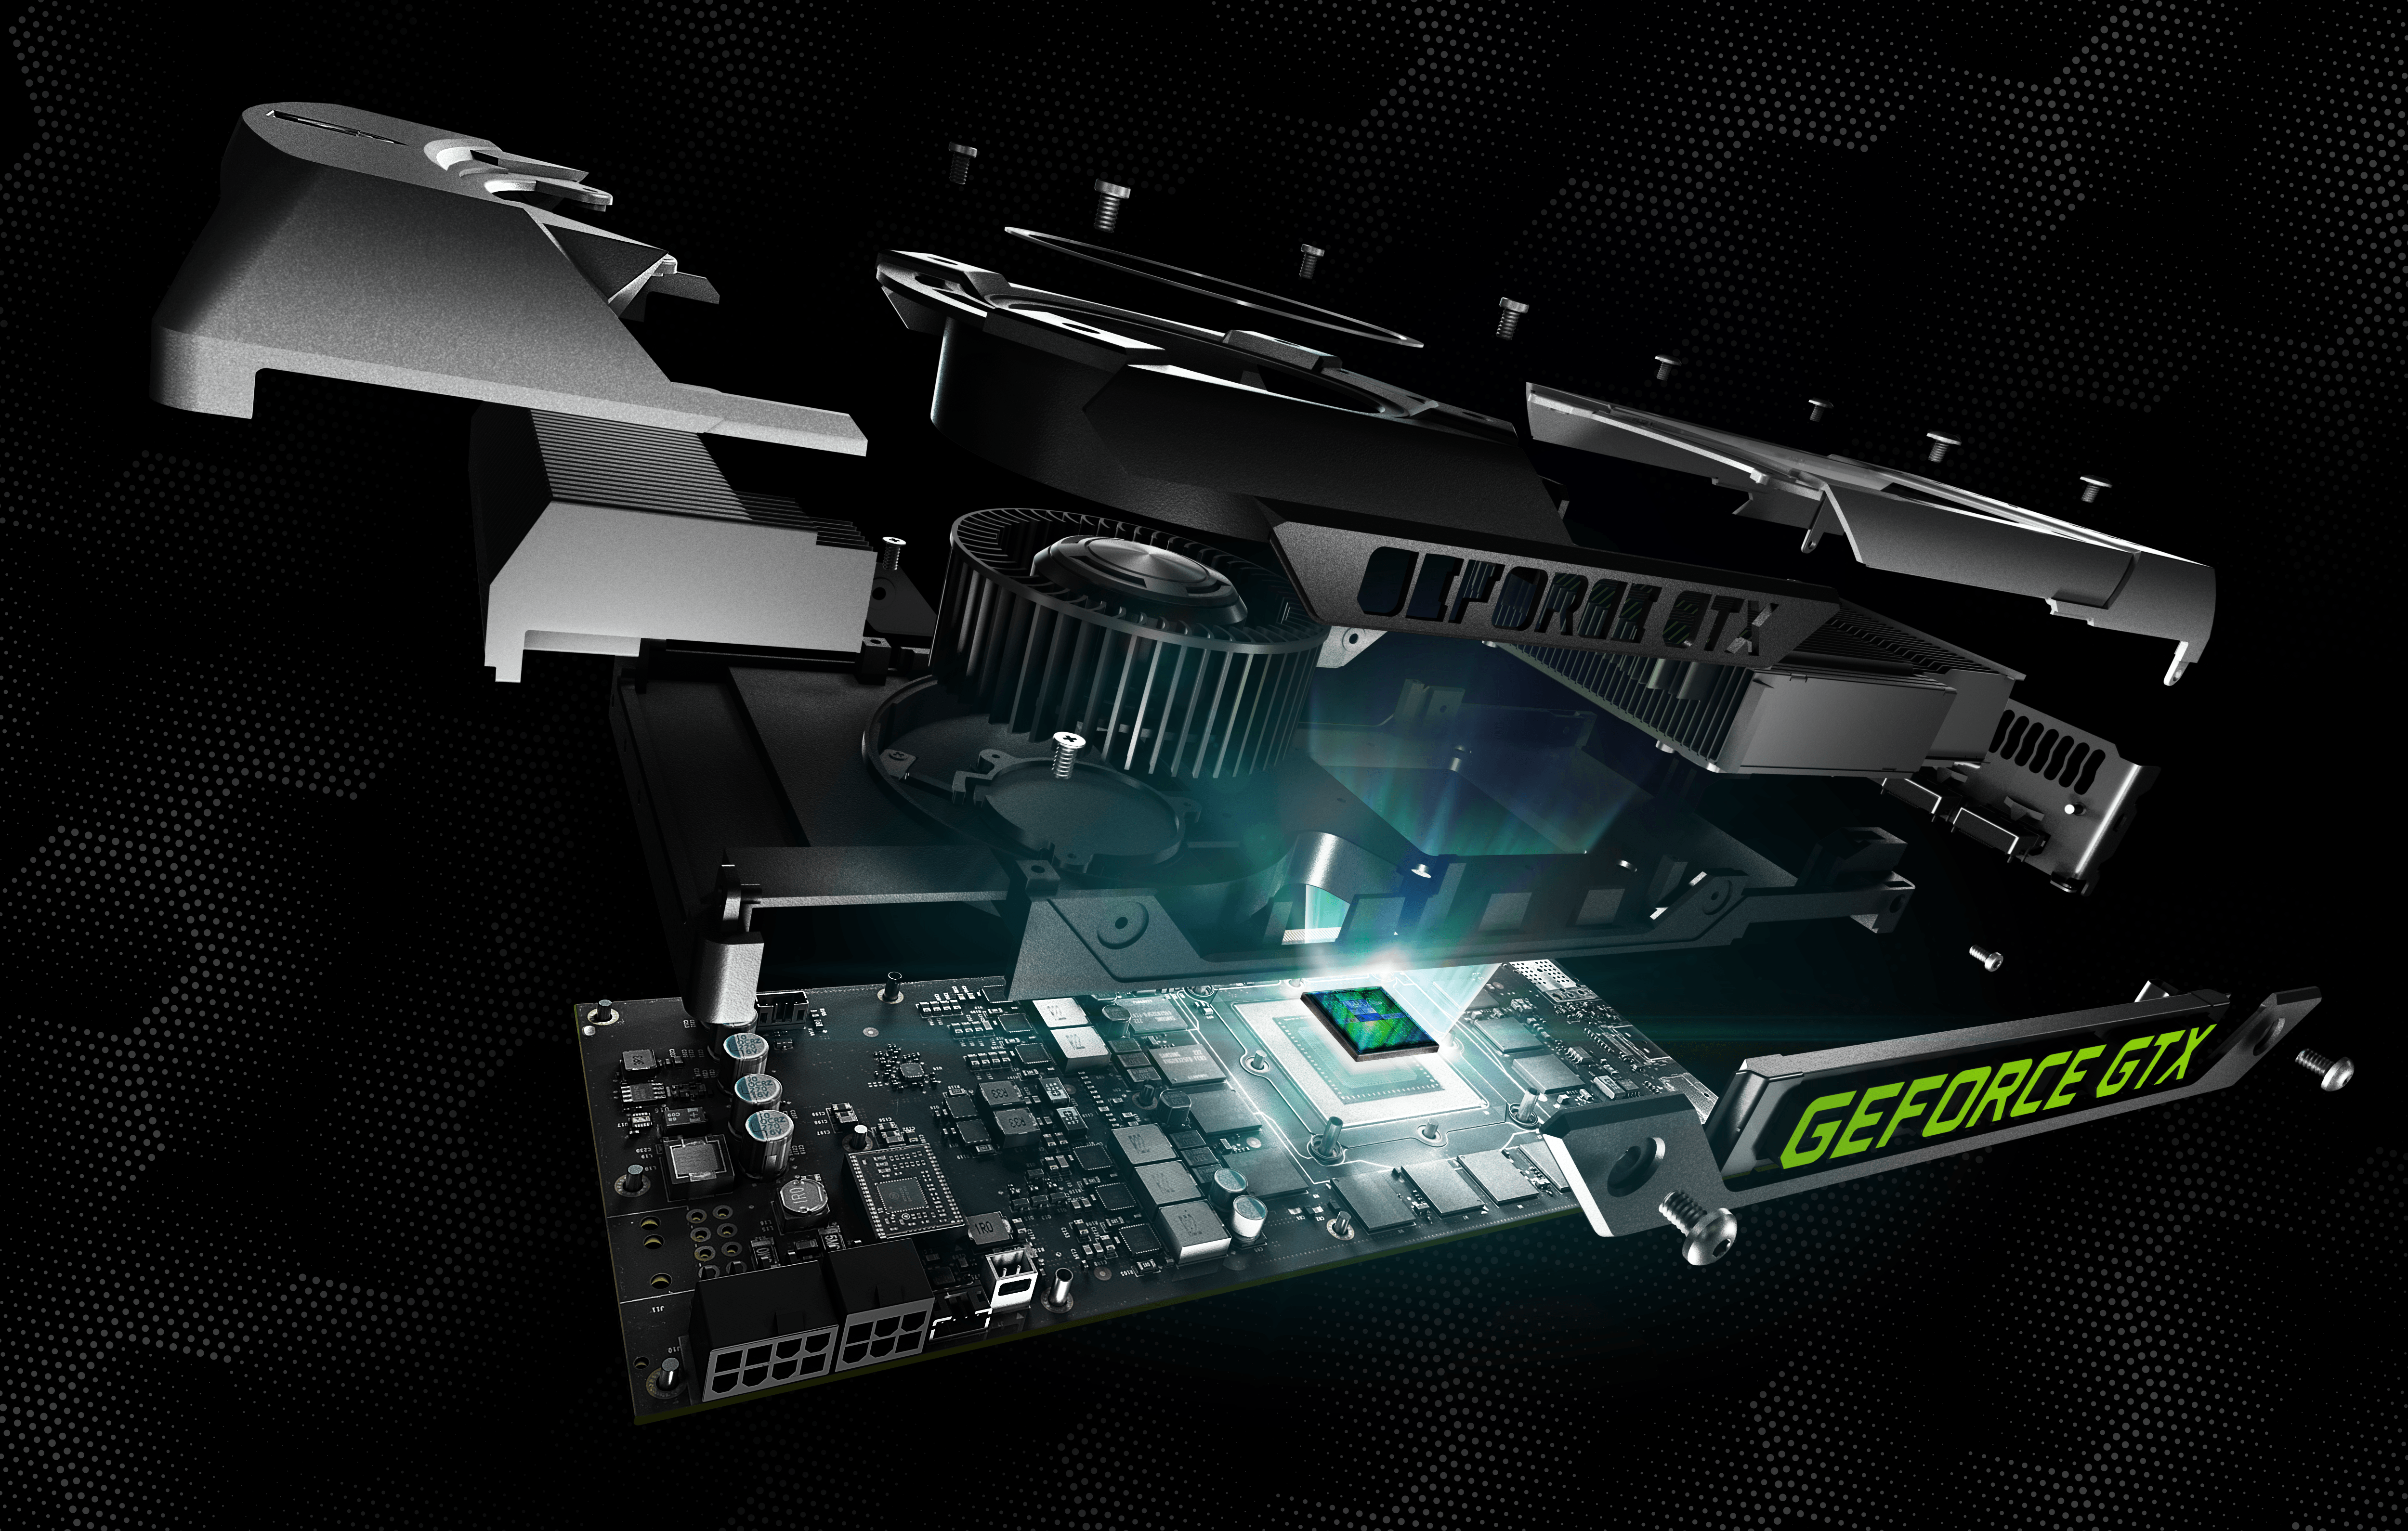 Introducing The GeForce GTX 780